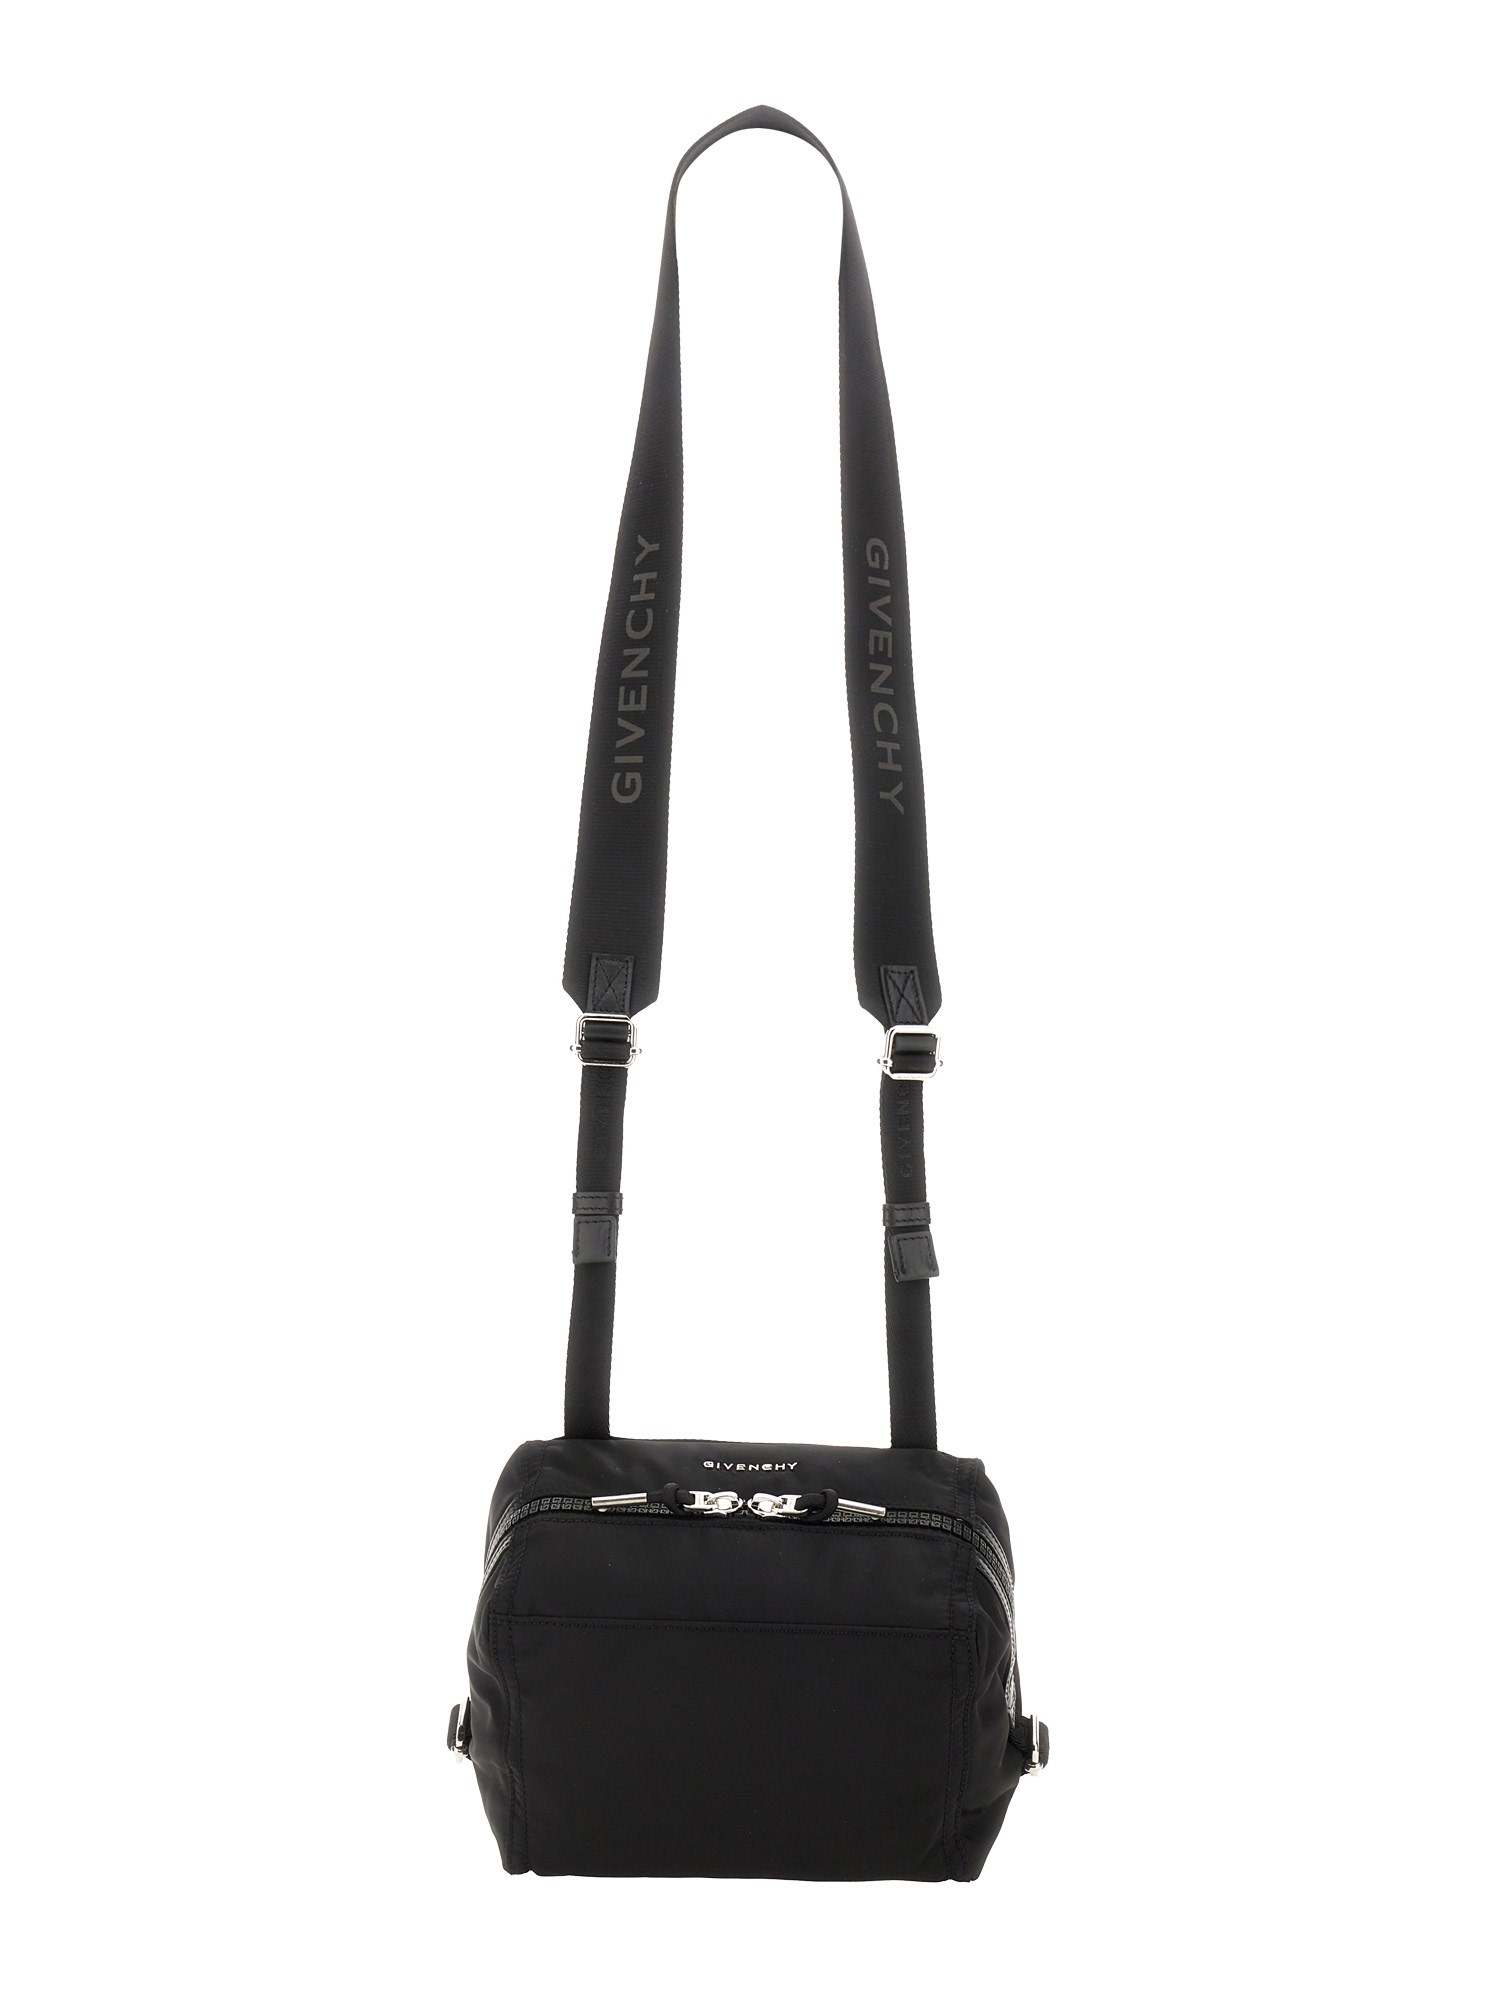 Givenchy Pandora Bag In Black